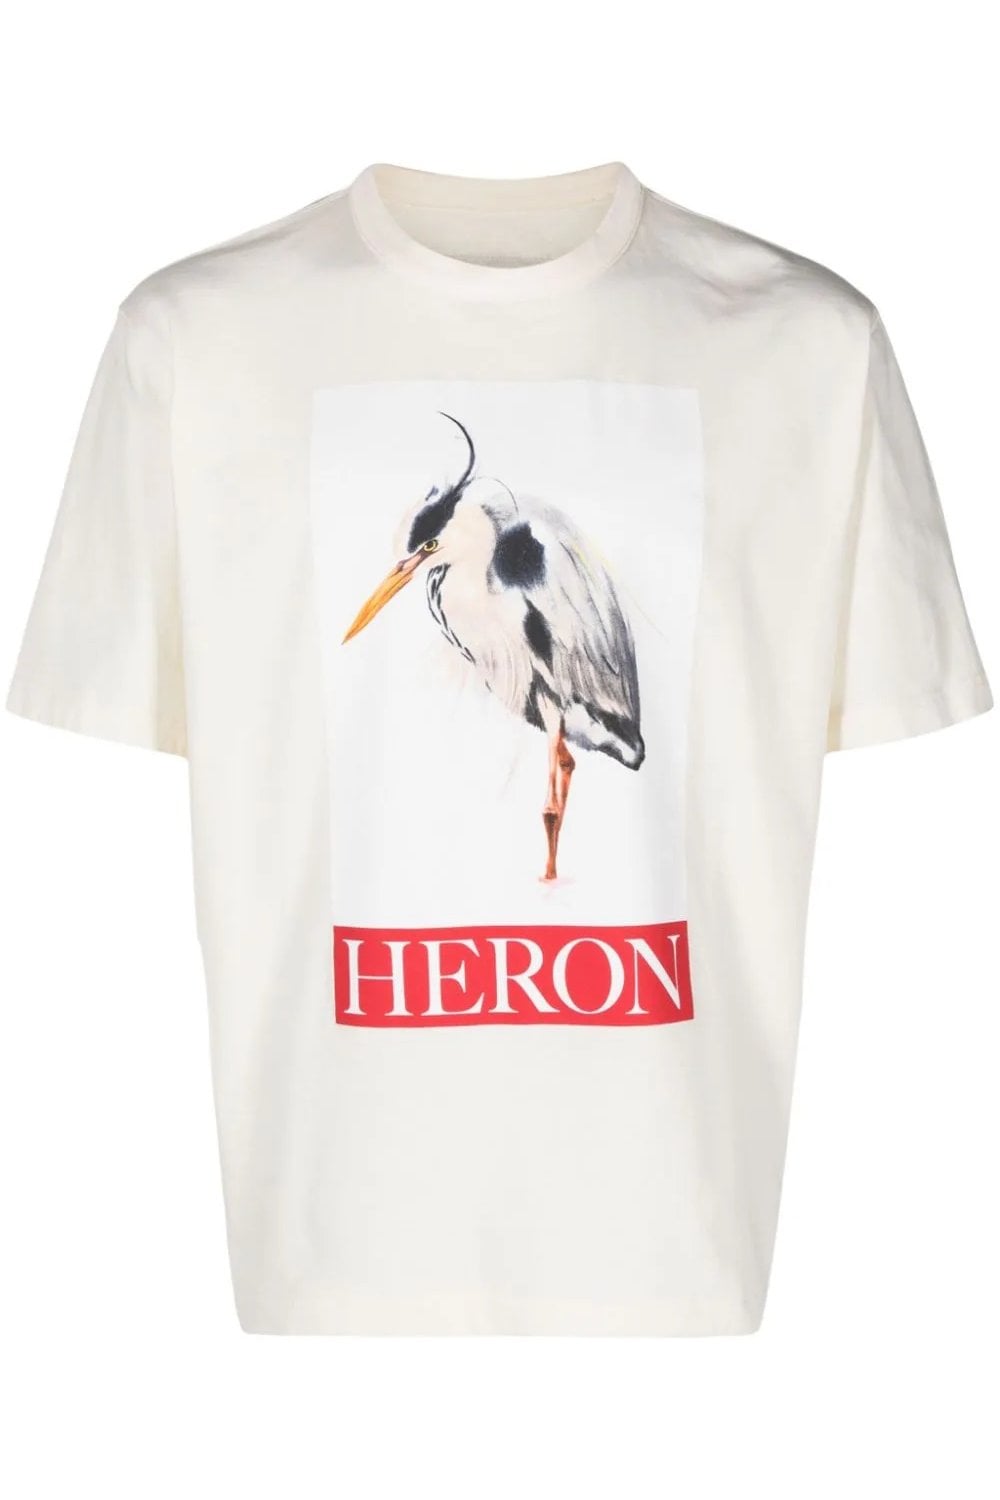 Heron Preston Heron Bird Painted Ivory Printed T-Shirt in White